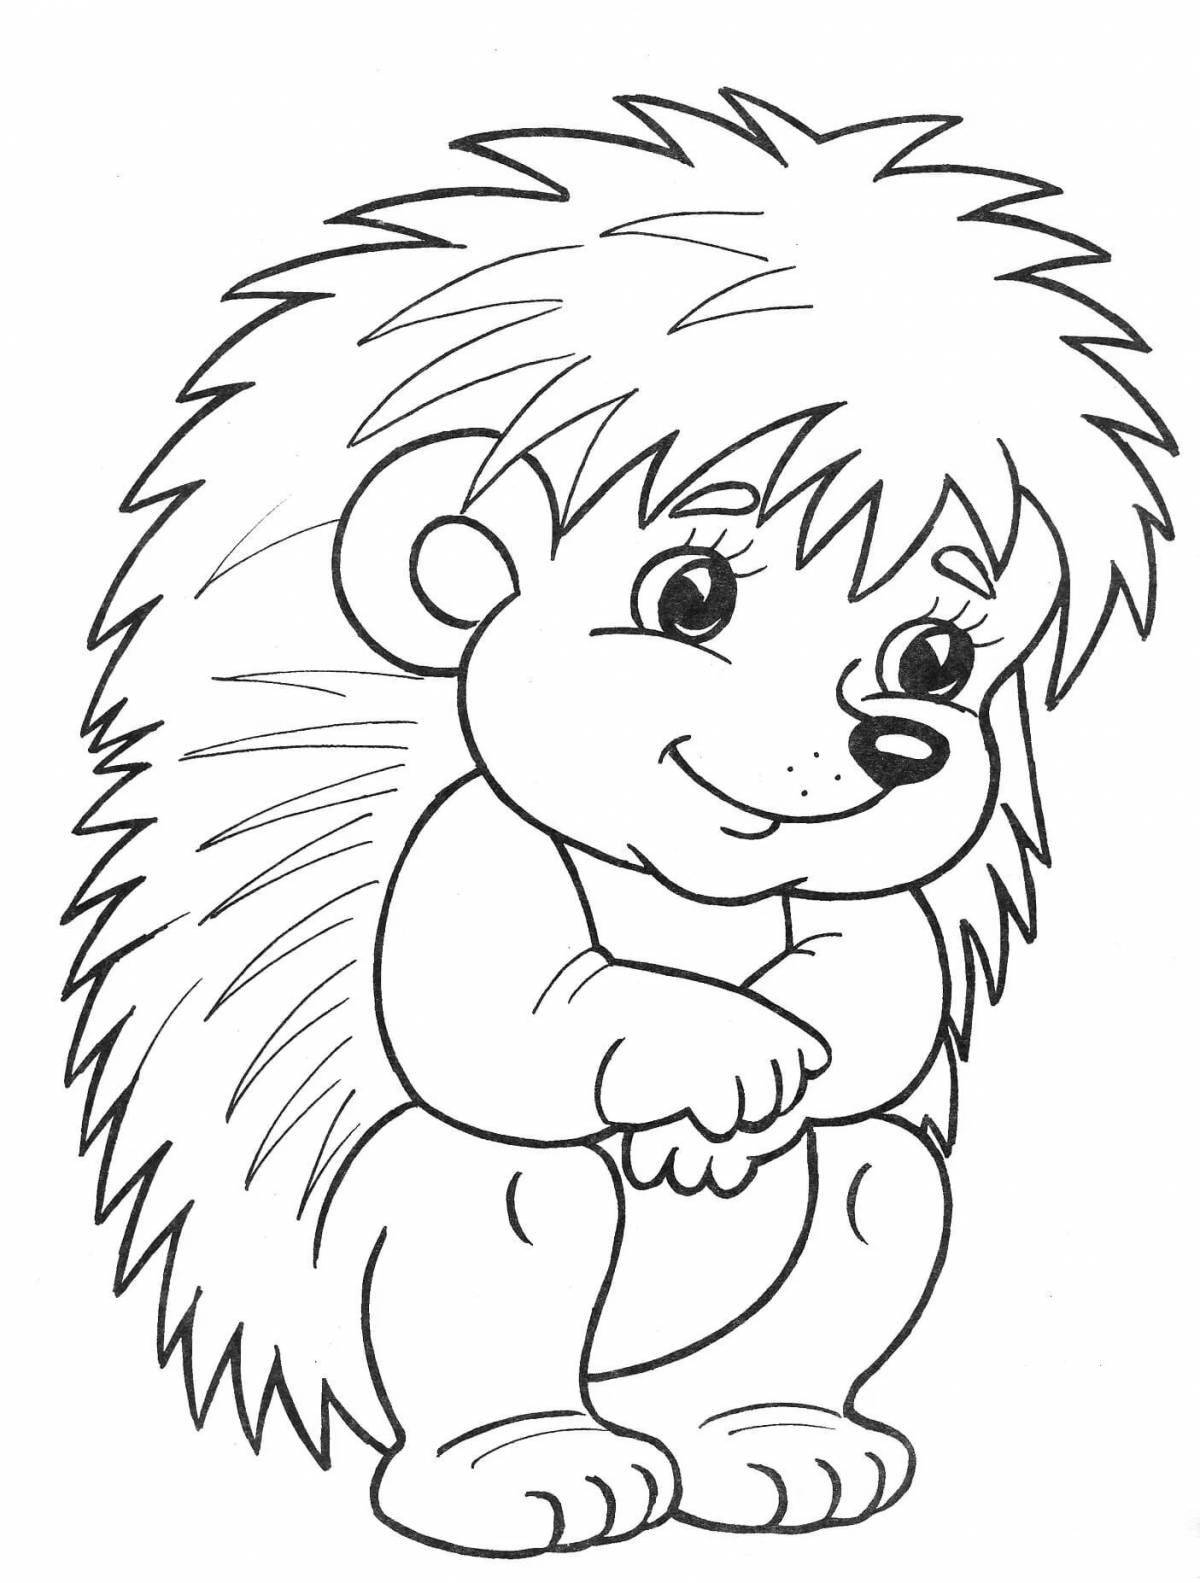 Drawing of a happy hedgehog